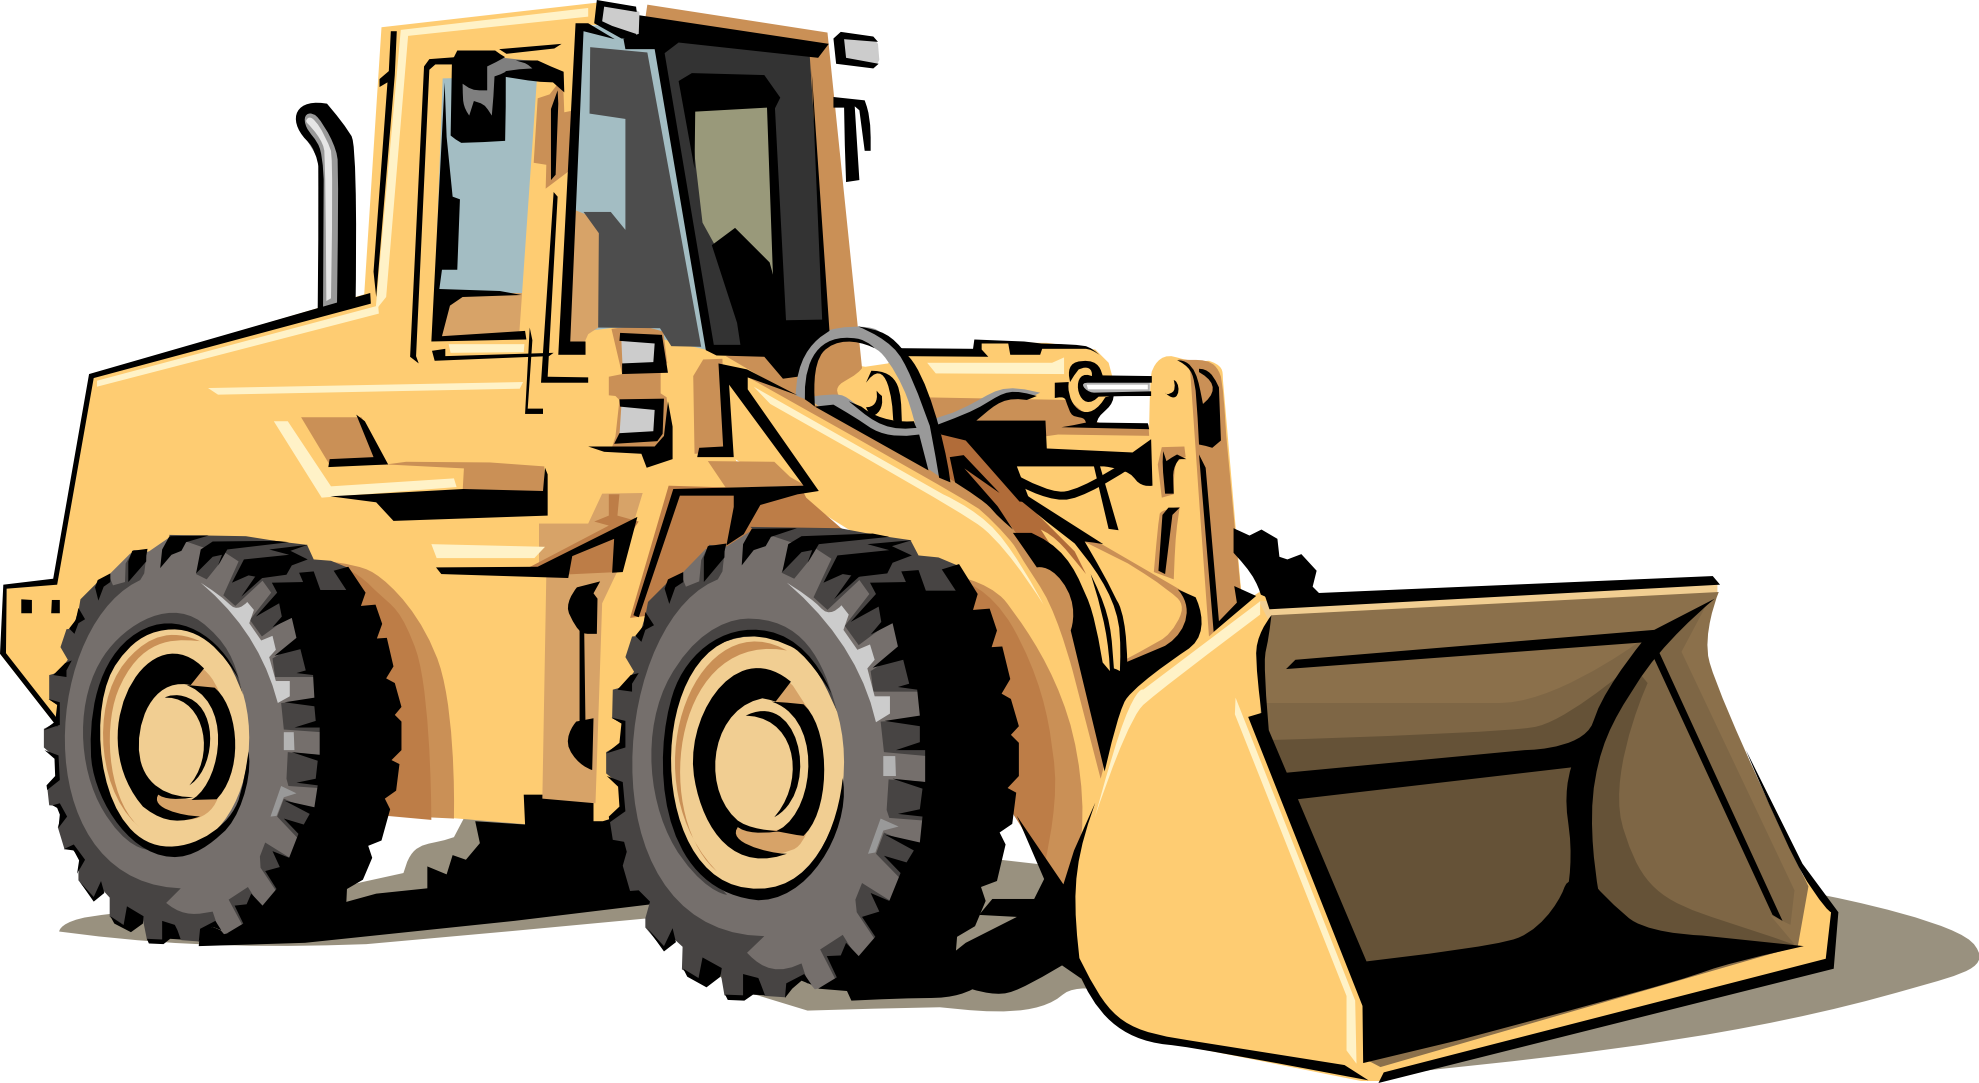 heavy equipment: Construction